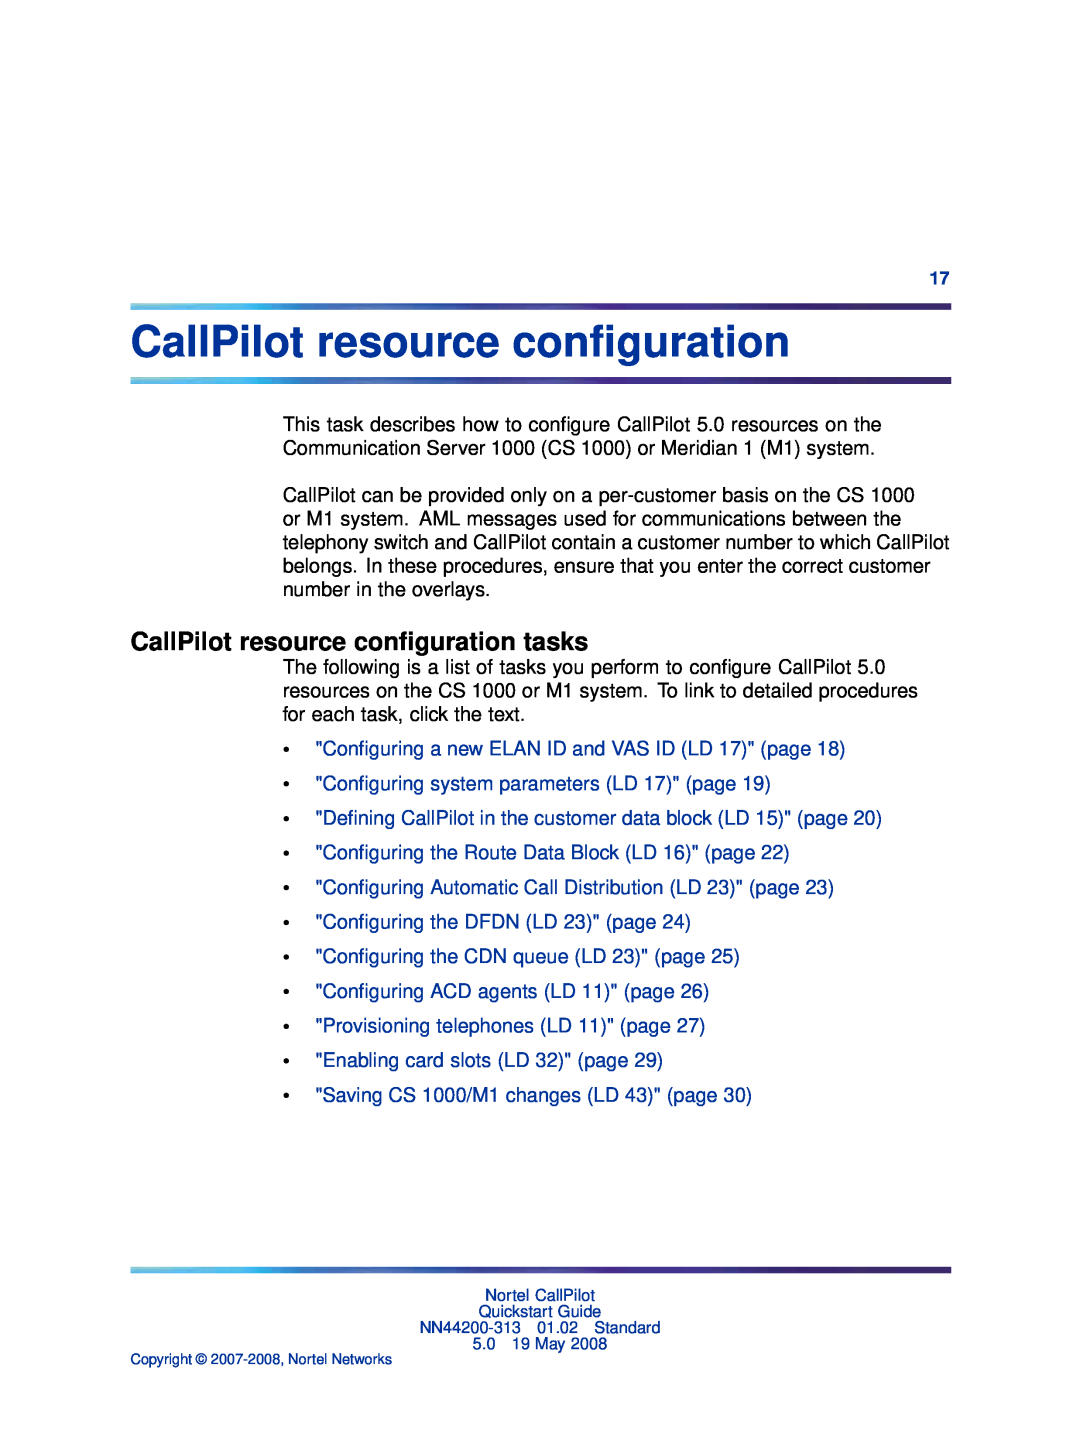 Nortel Networks NN44200-313 CallPilot resource conﬁguration tasks, Conﬁguring a new ELAN ID and VAS ID LD 17 page 